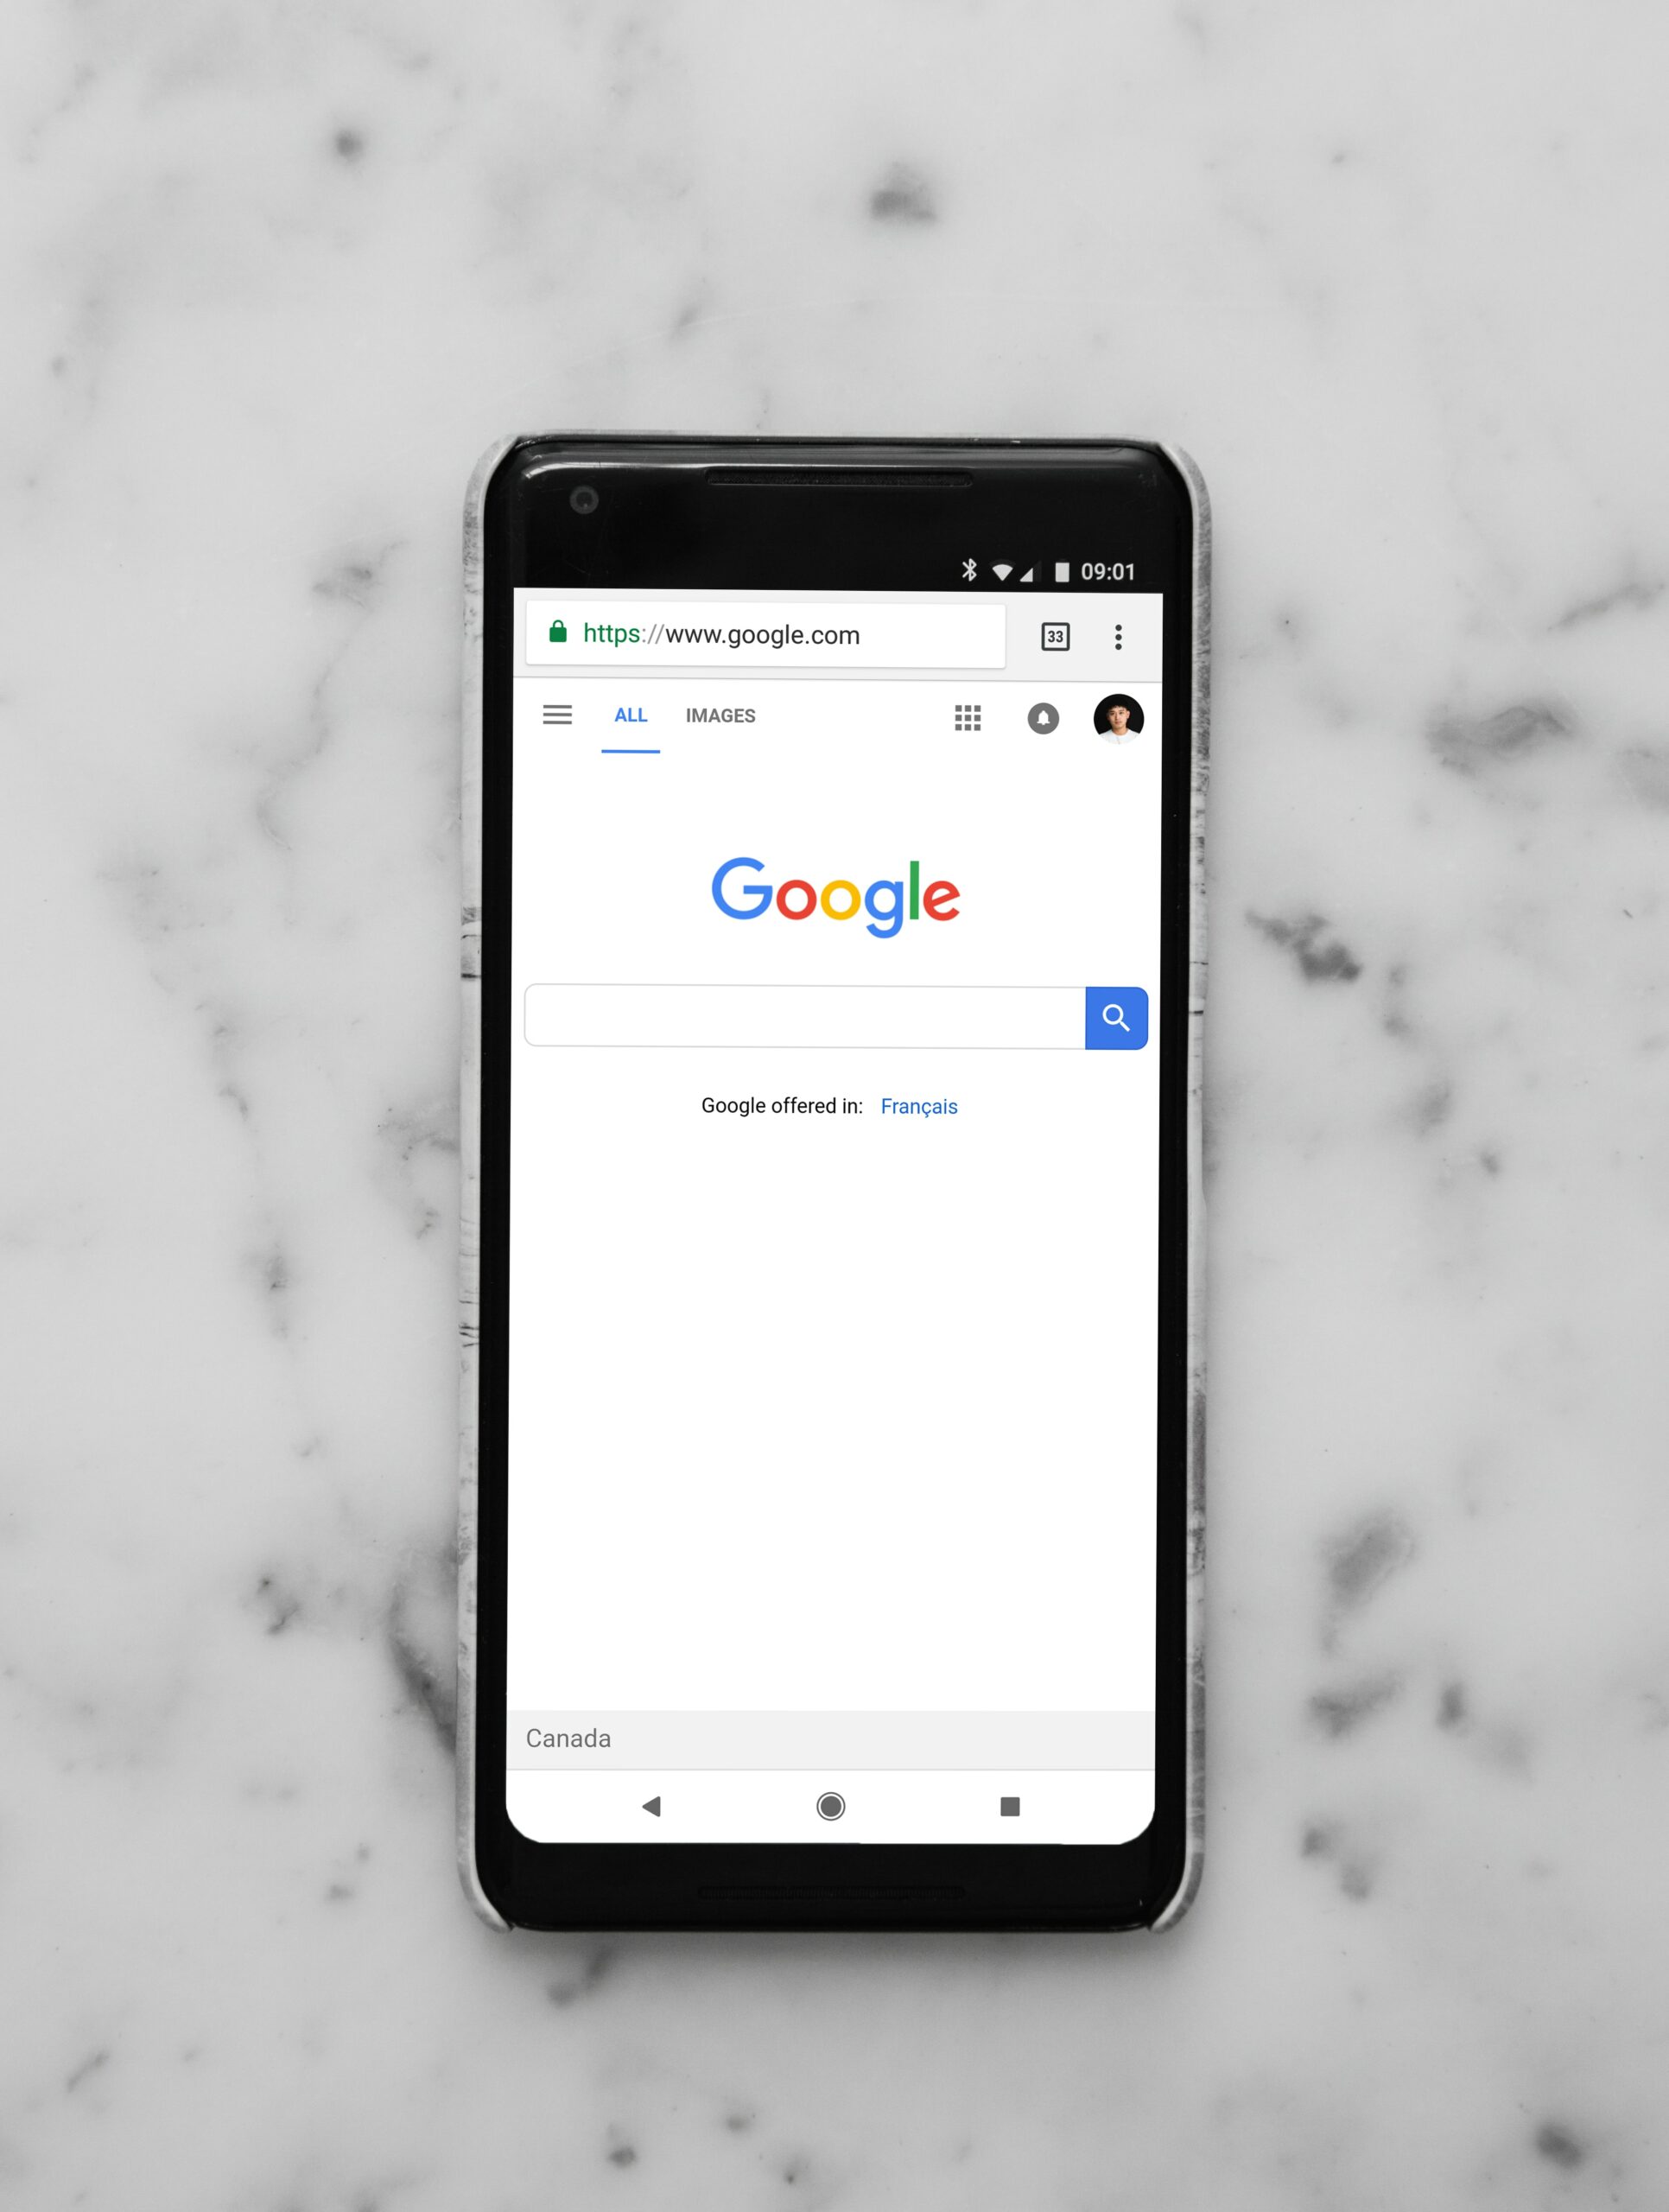 Google on mobile phone